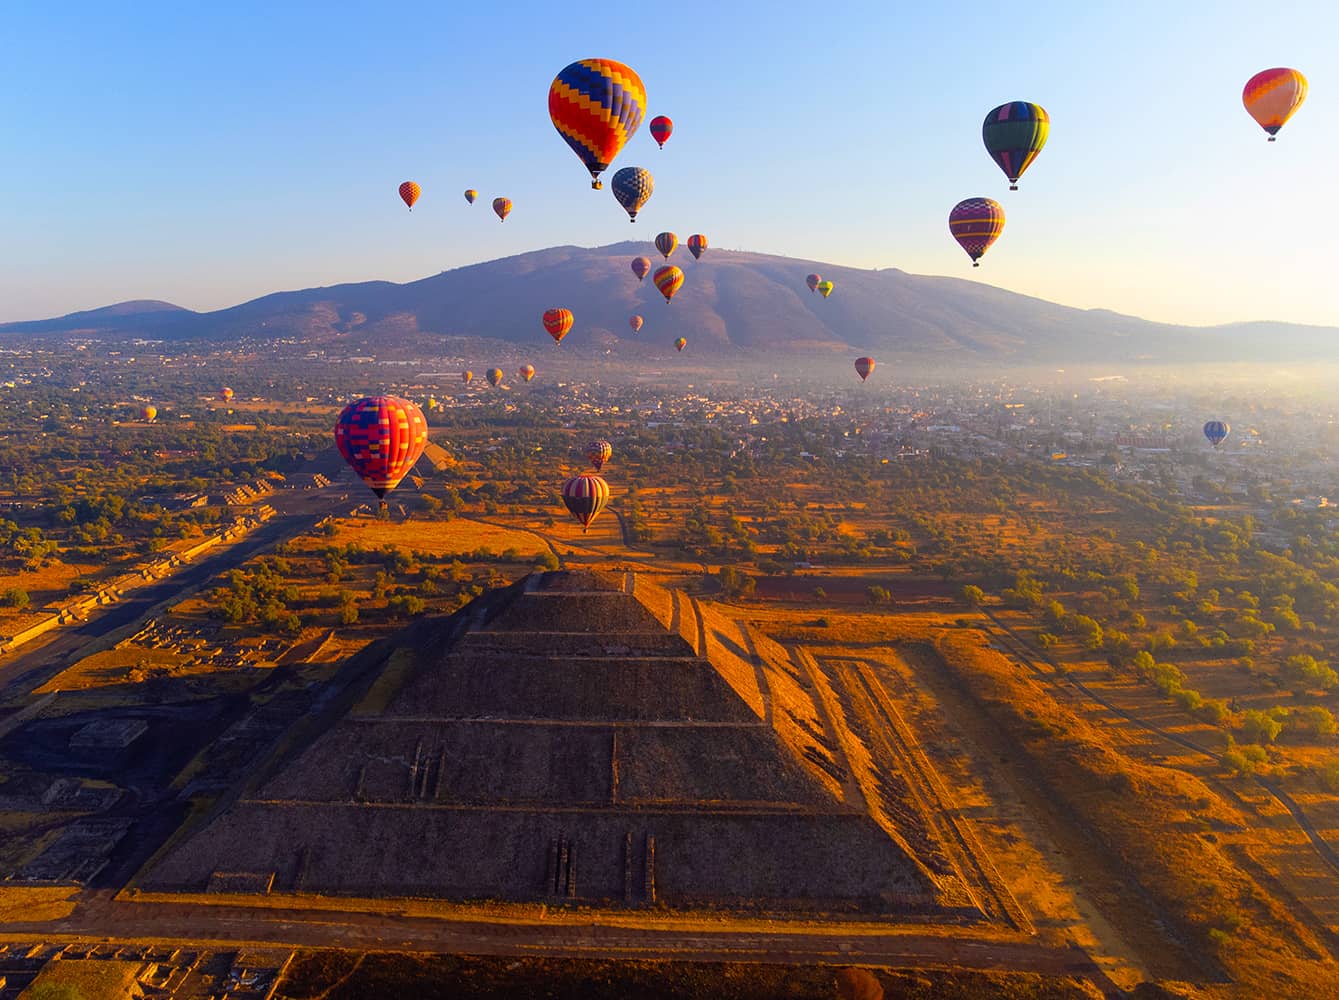  Teotihuacan Pyramids sunrise hot air ballon ride.  